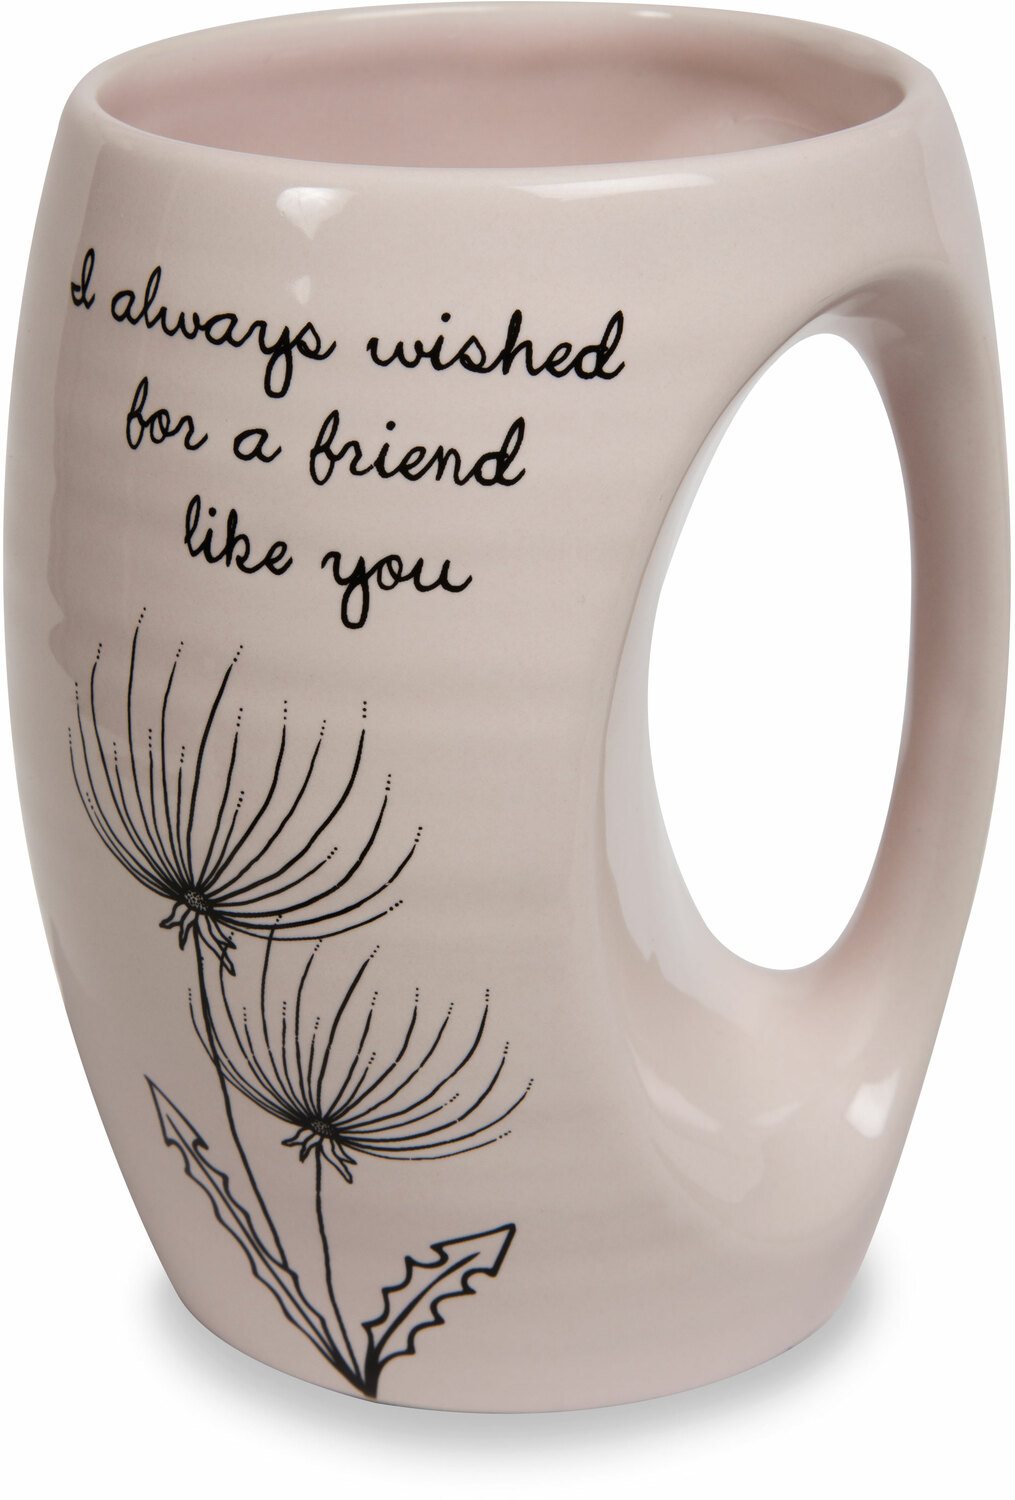 Friend by Dandelion Wishes - Friend - 16 oz Mug